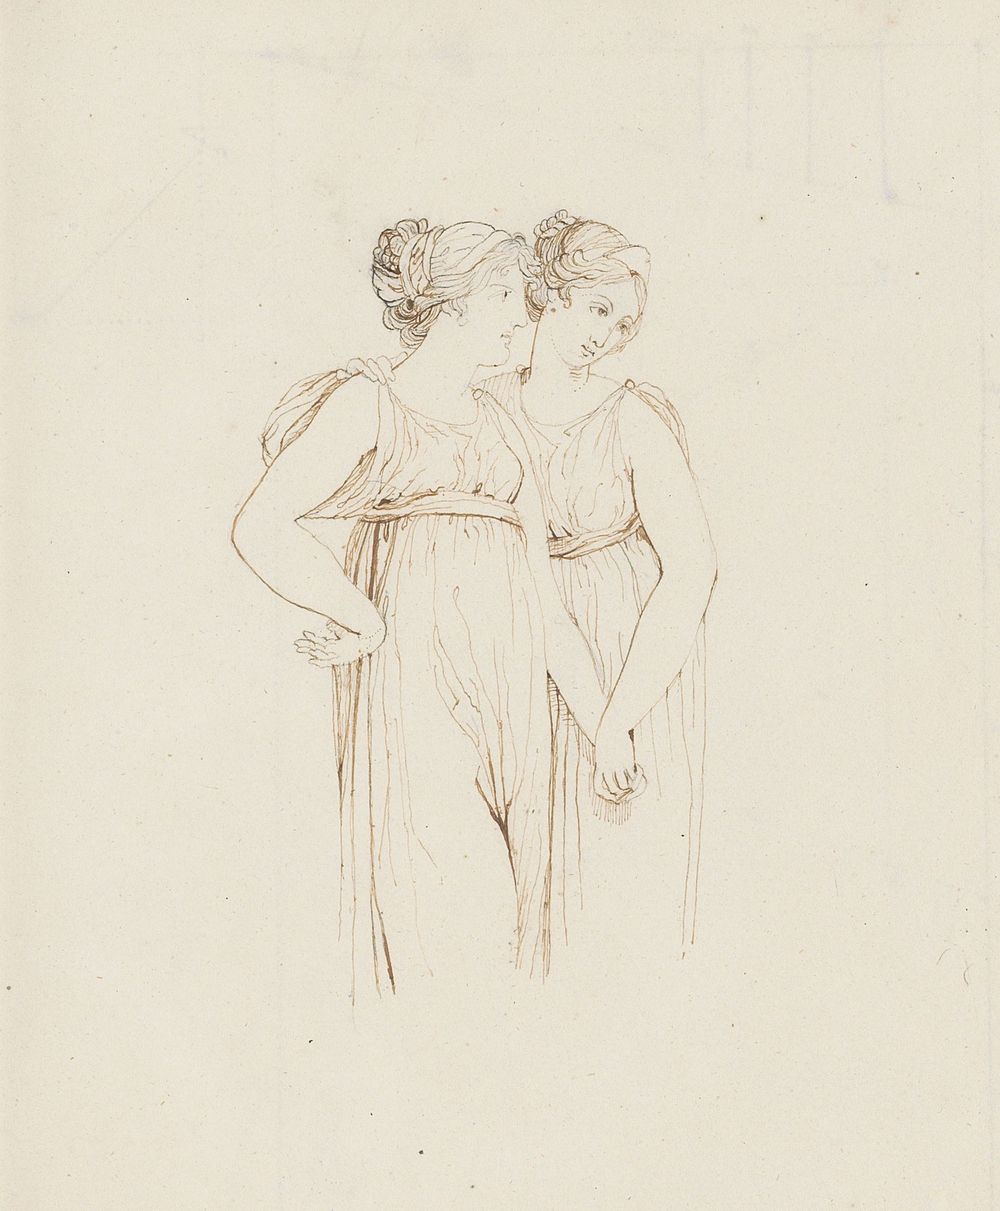 Twee vrouwen die elkaars hand vasthouden, naar klassiek voorbeeld (1813) by Catharina Kemper and jonkvrouw Elisabeth Kemper